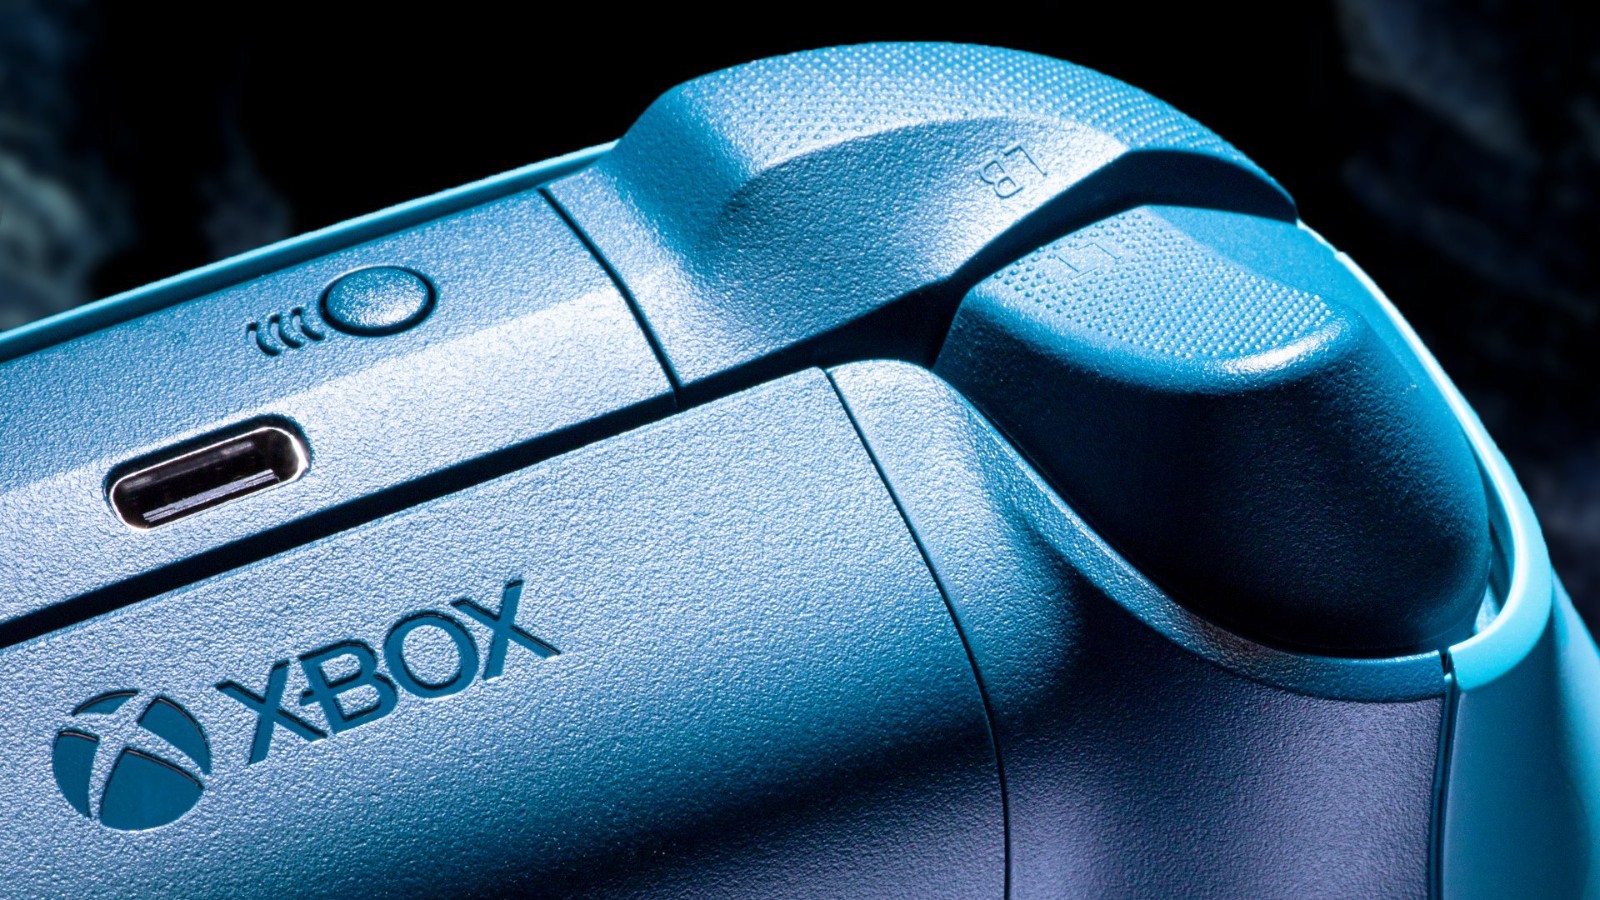 Xbox series矿物迷彩手柄10月11日发货 售价499元